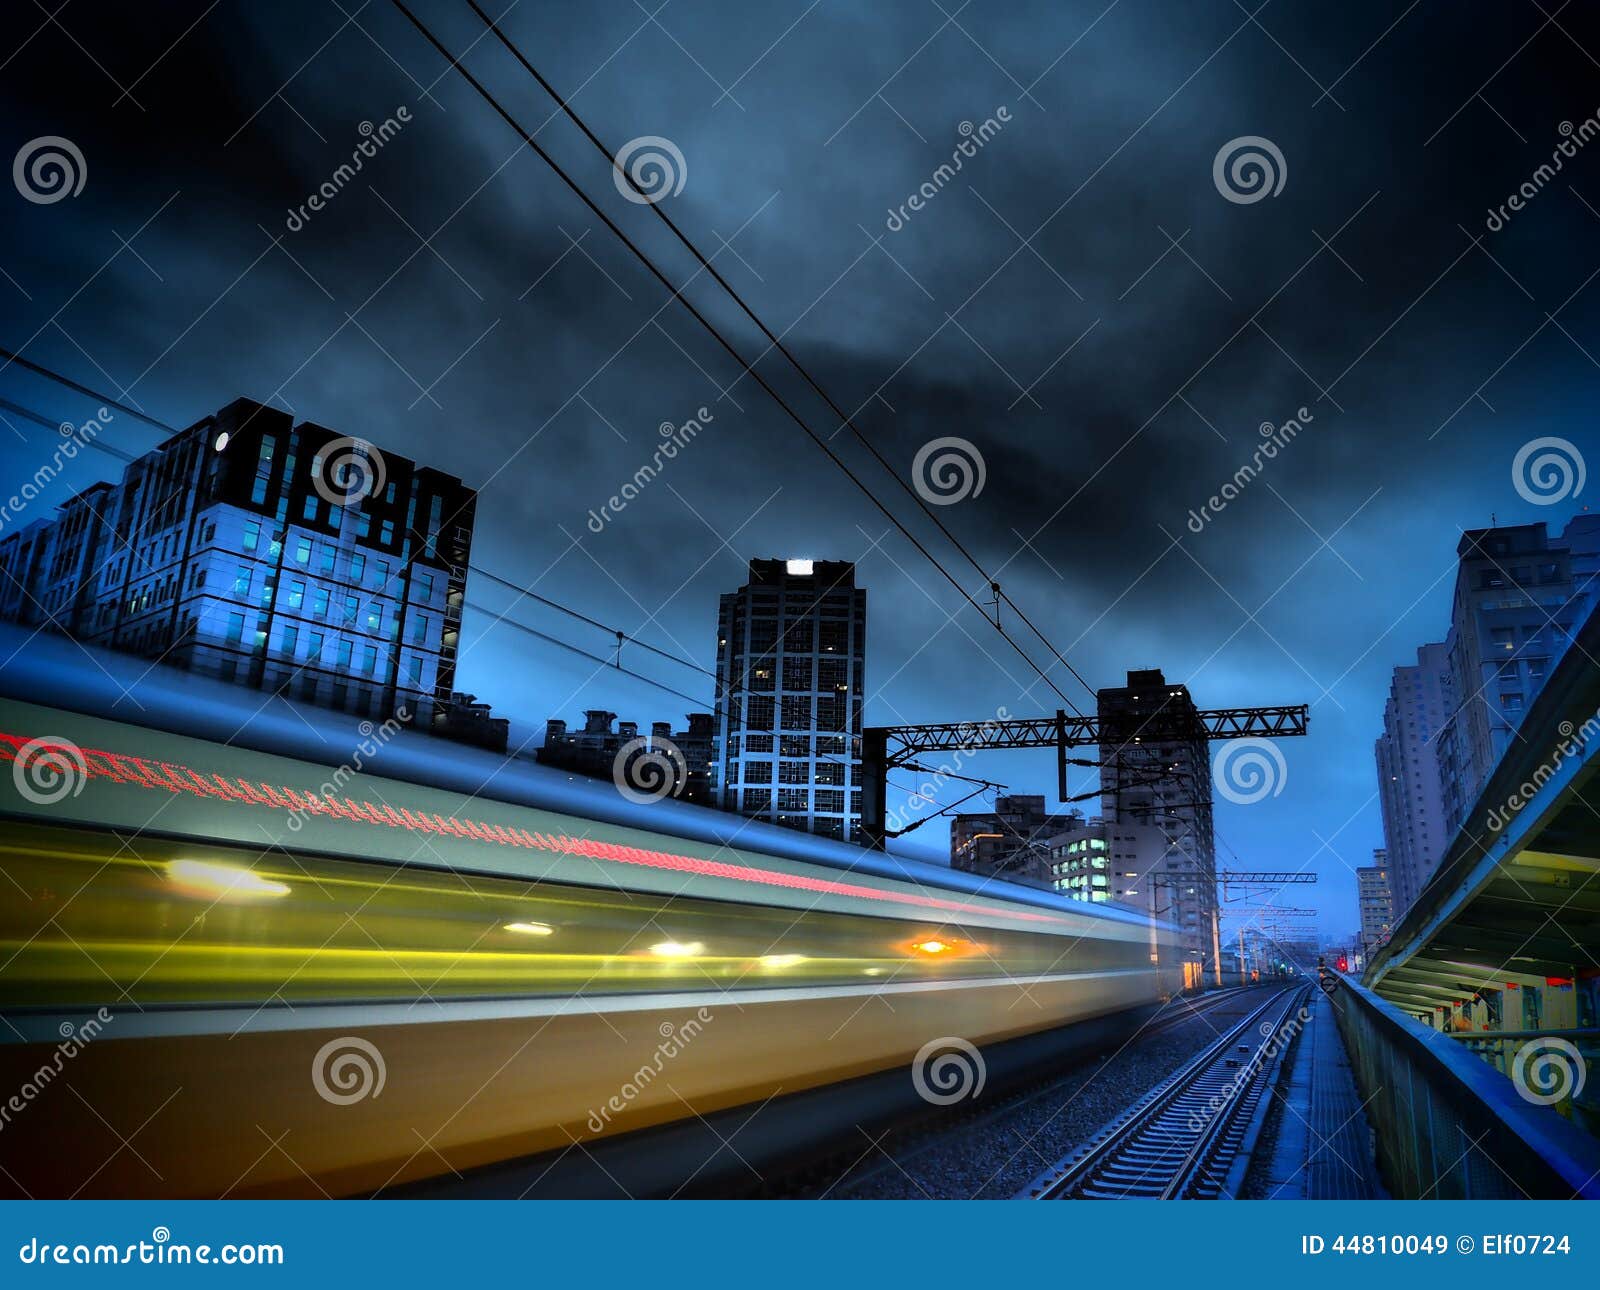 speedy train and modern city at night